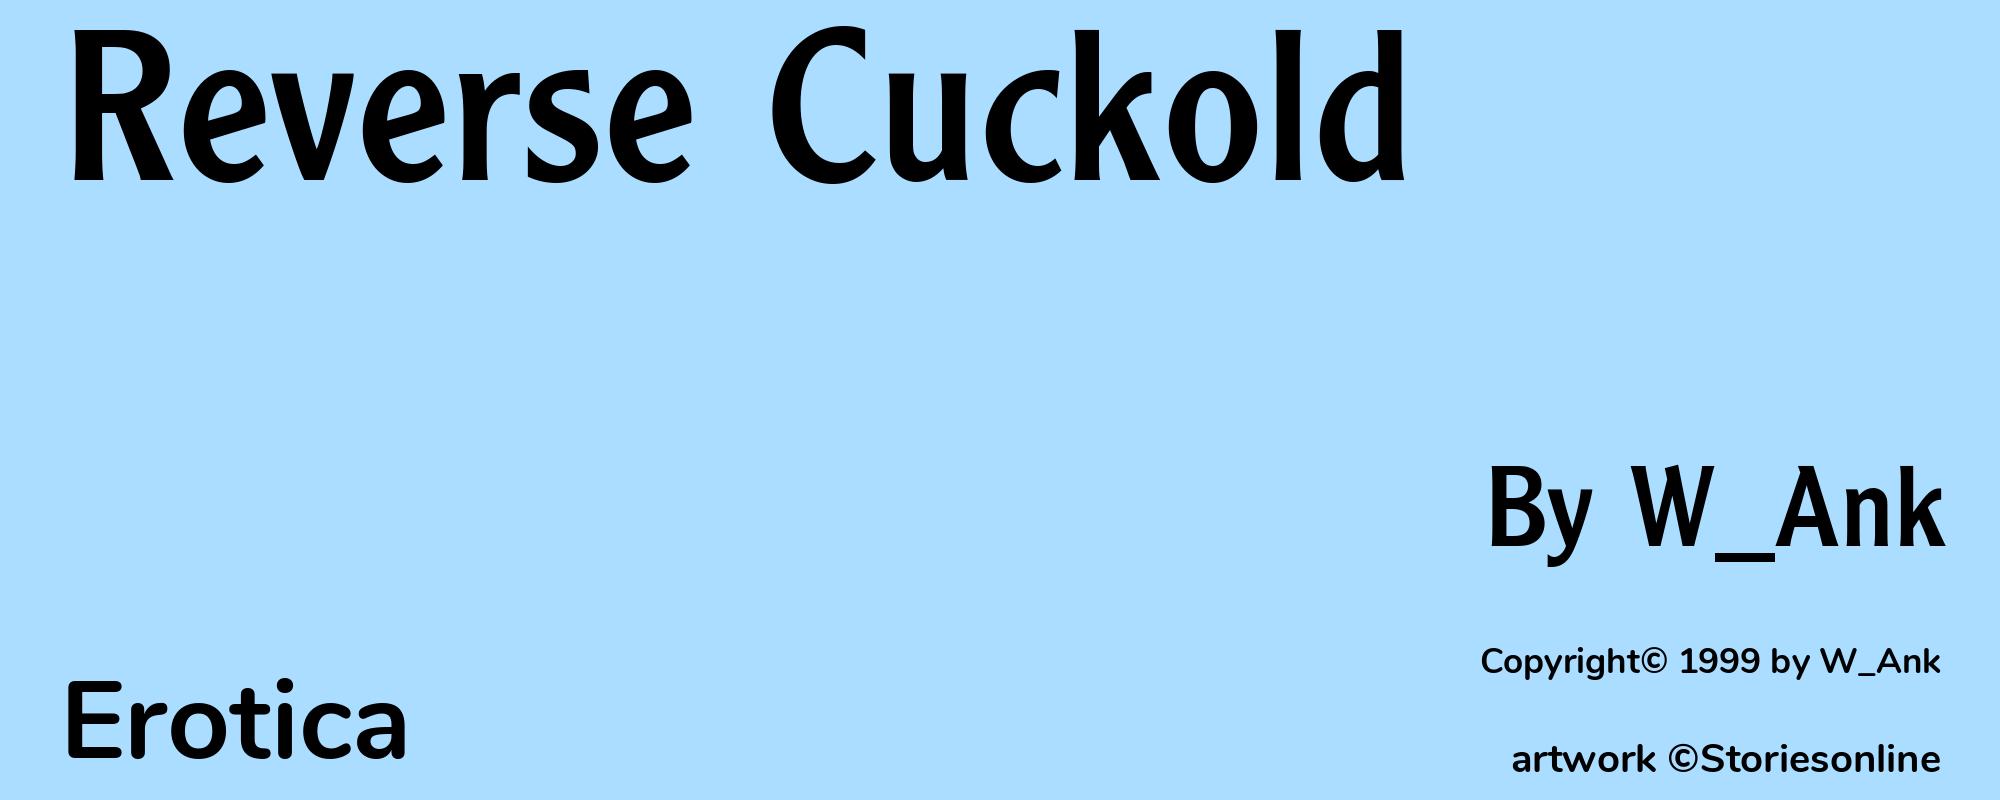 Reverse Cuckold - Cover